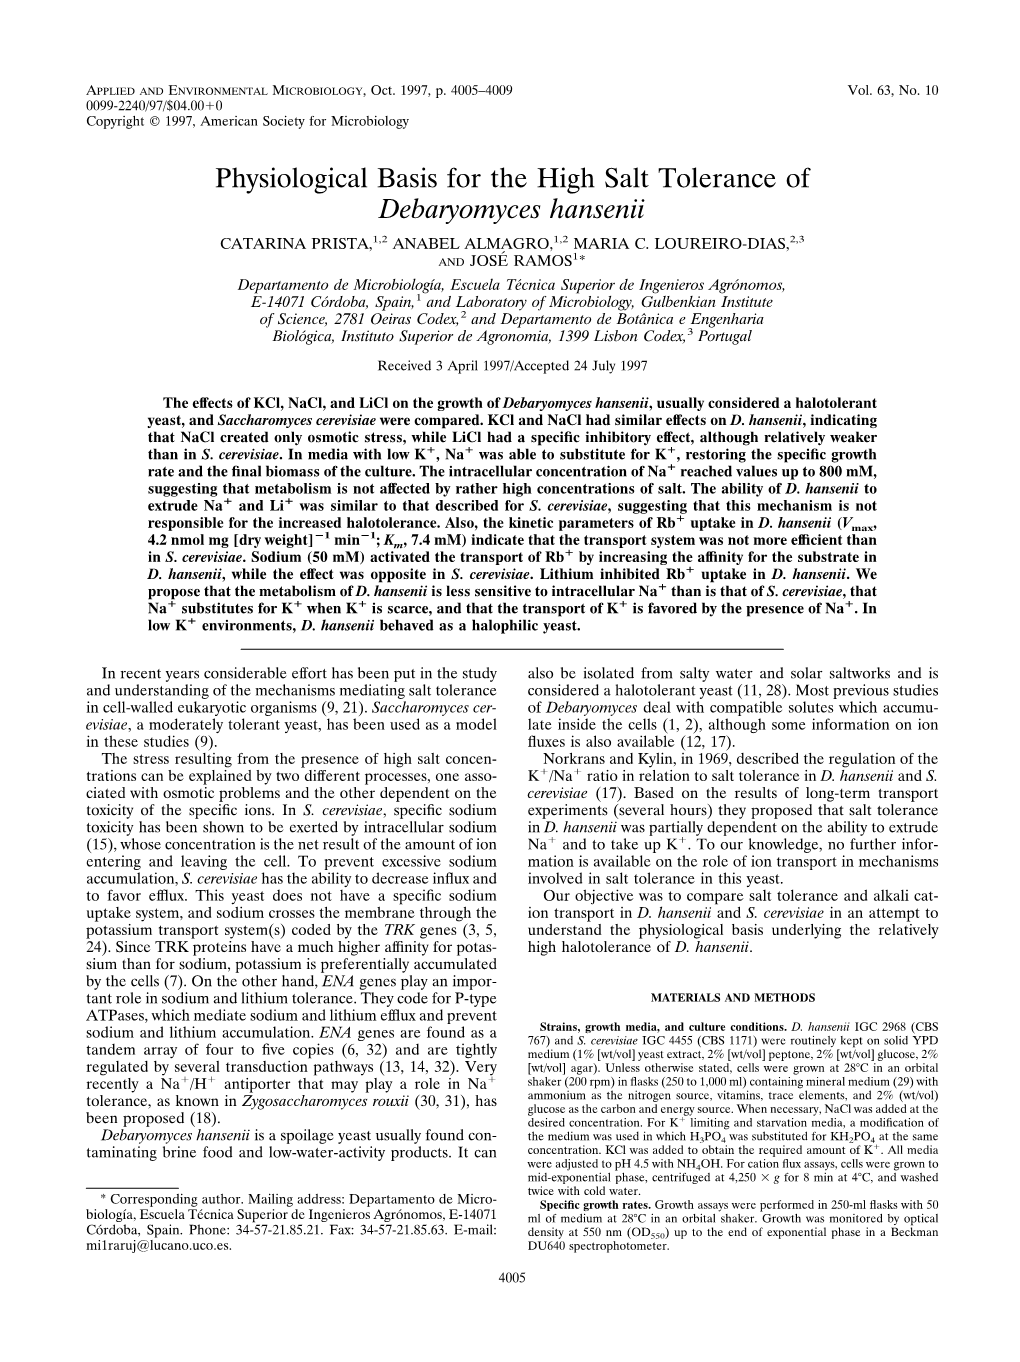 Physiological Basis for the High Salt Tolerance of Debaryomyces Hansenii